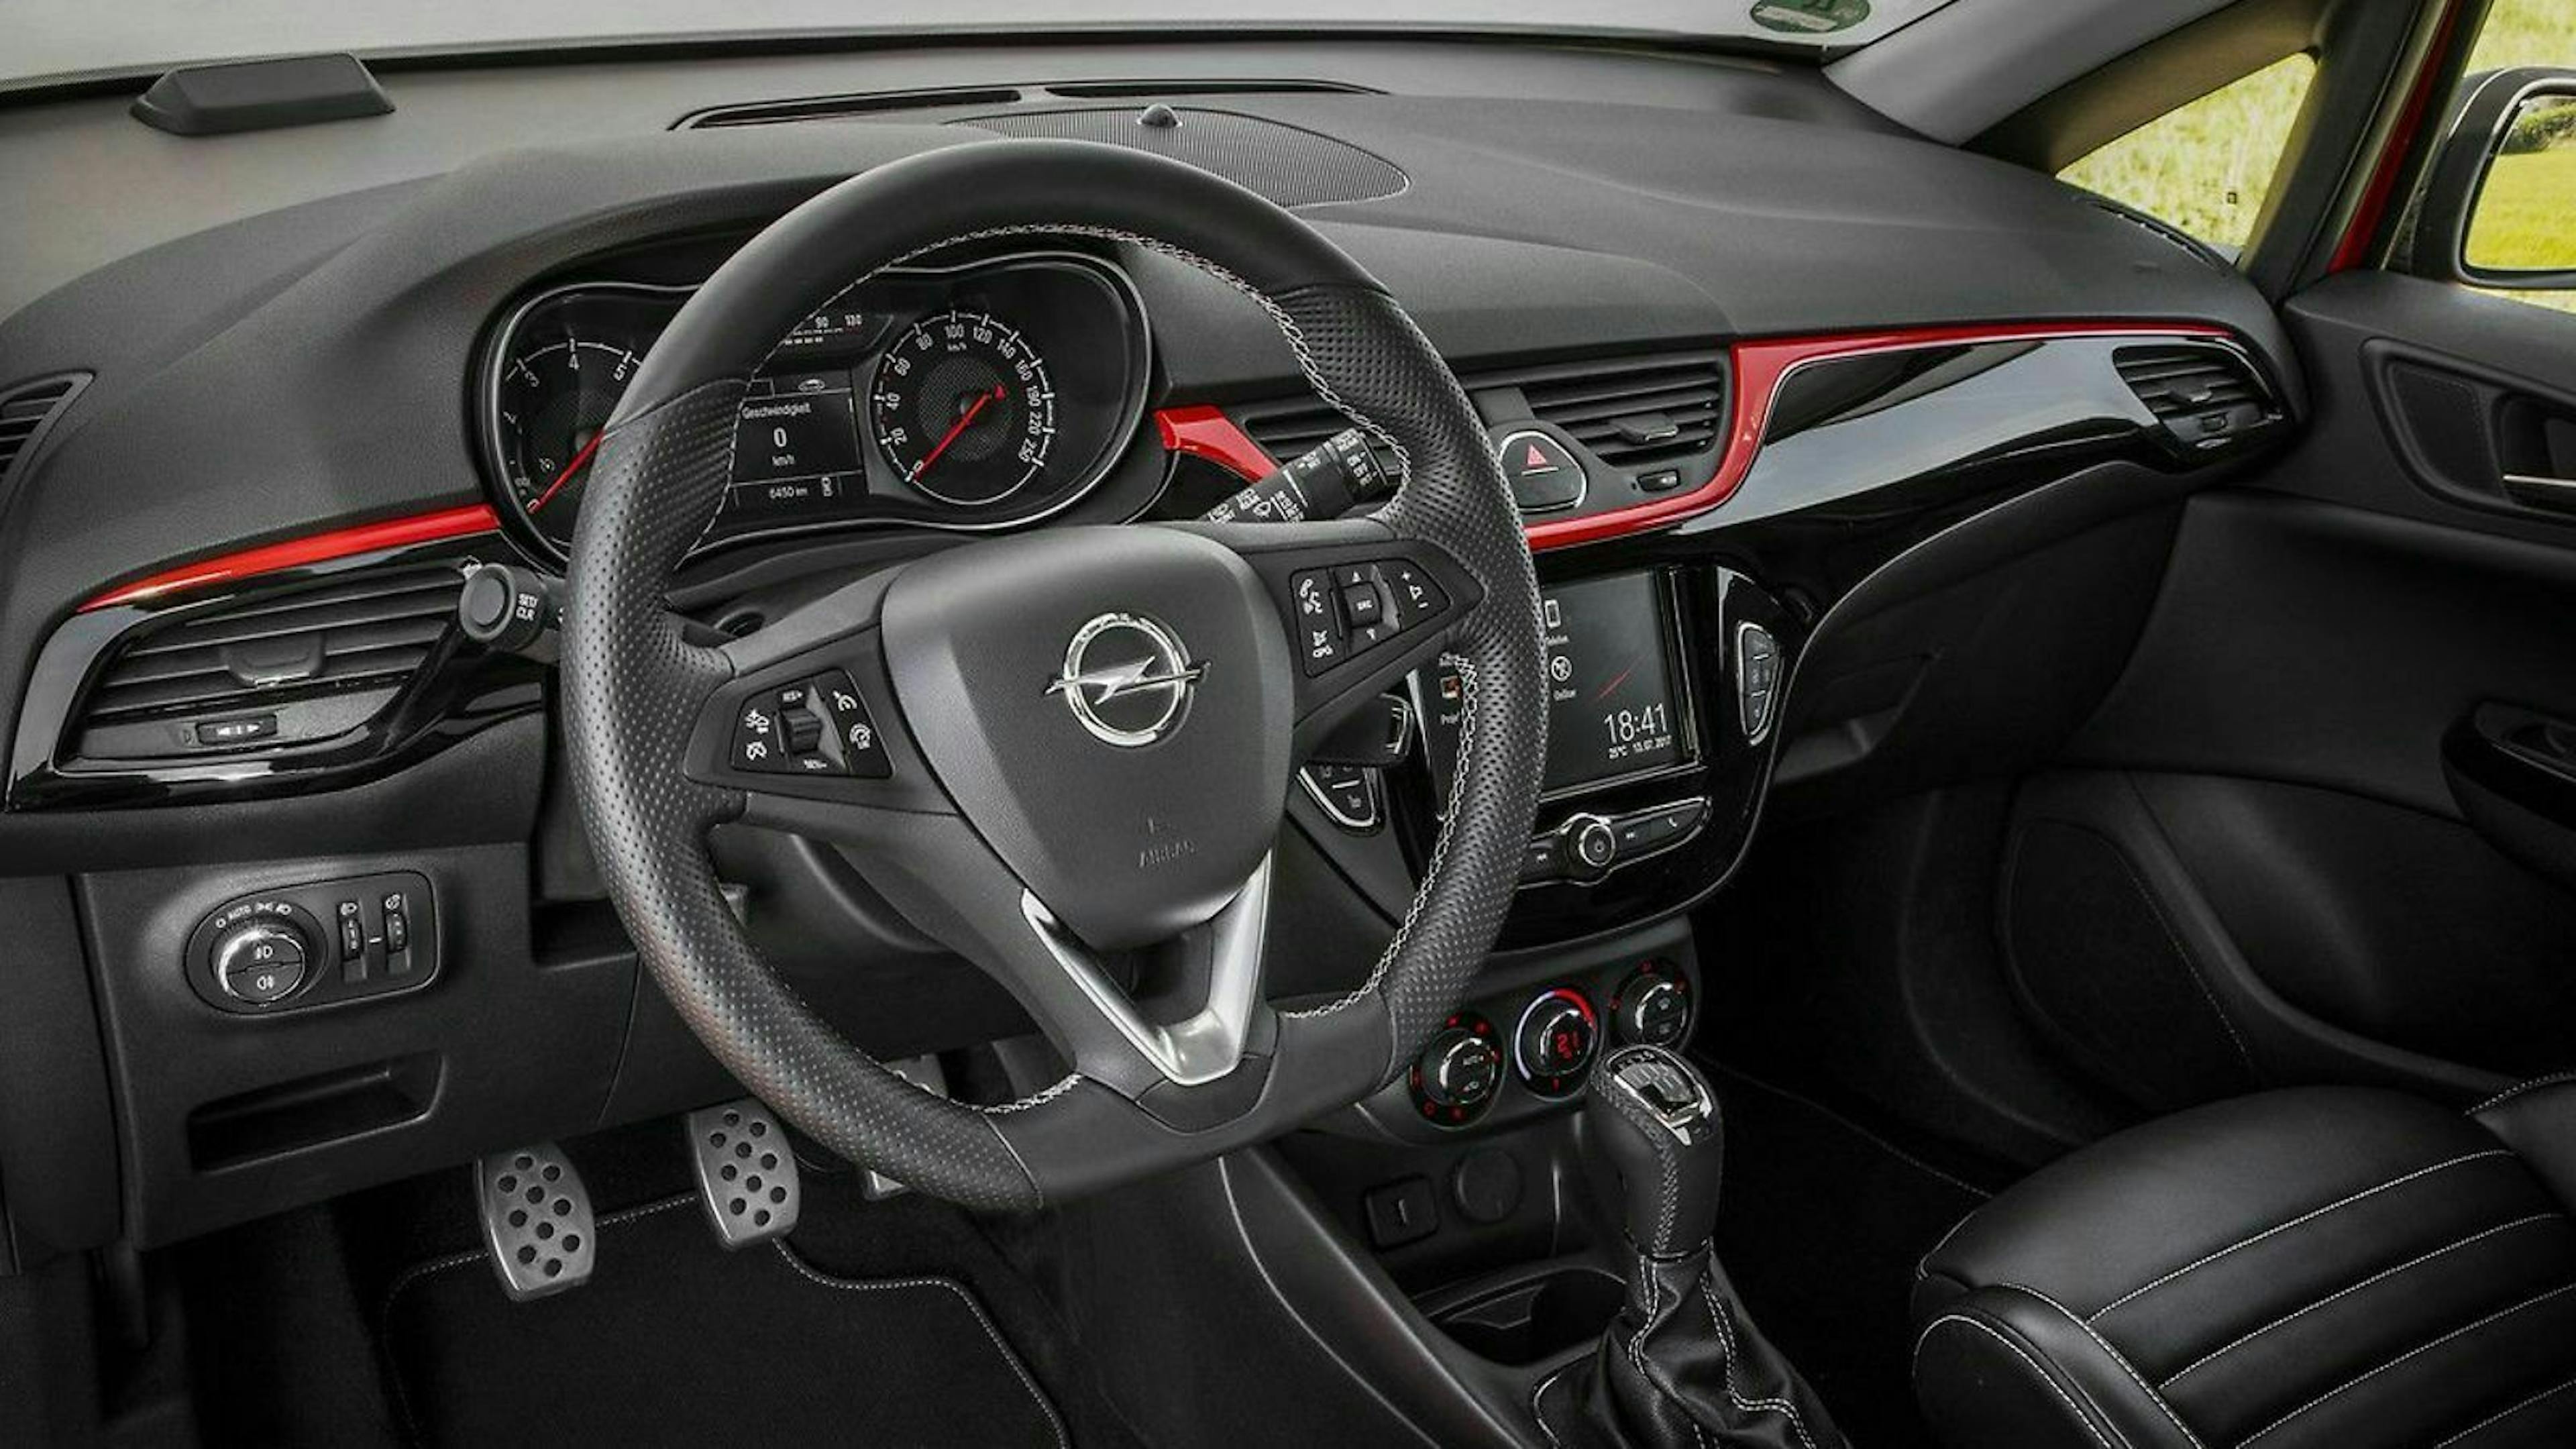 Opel Corsa S Cockpit